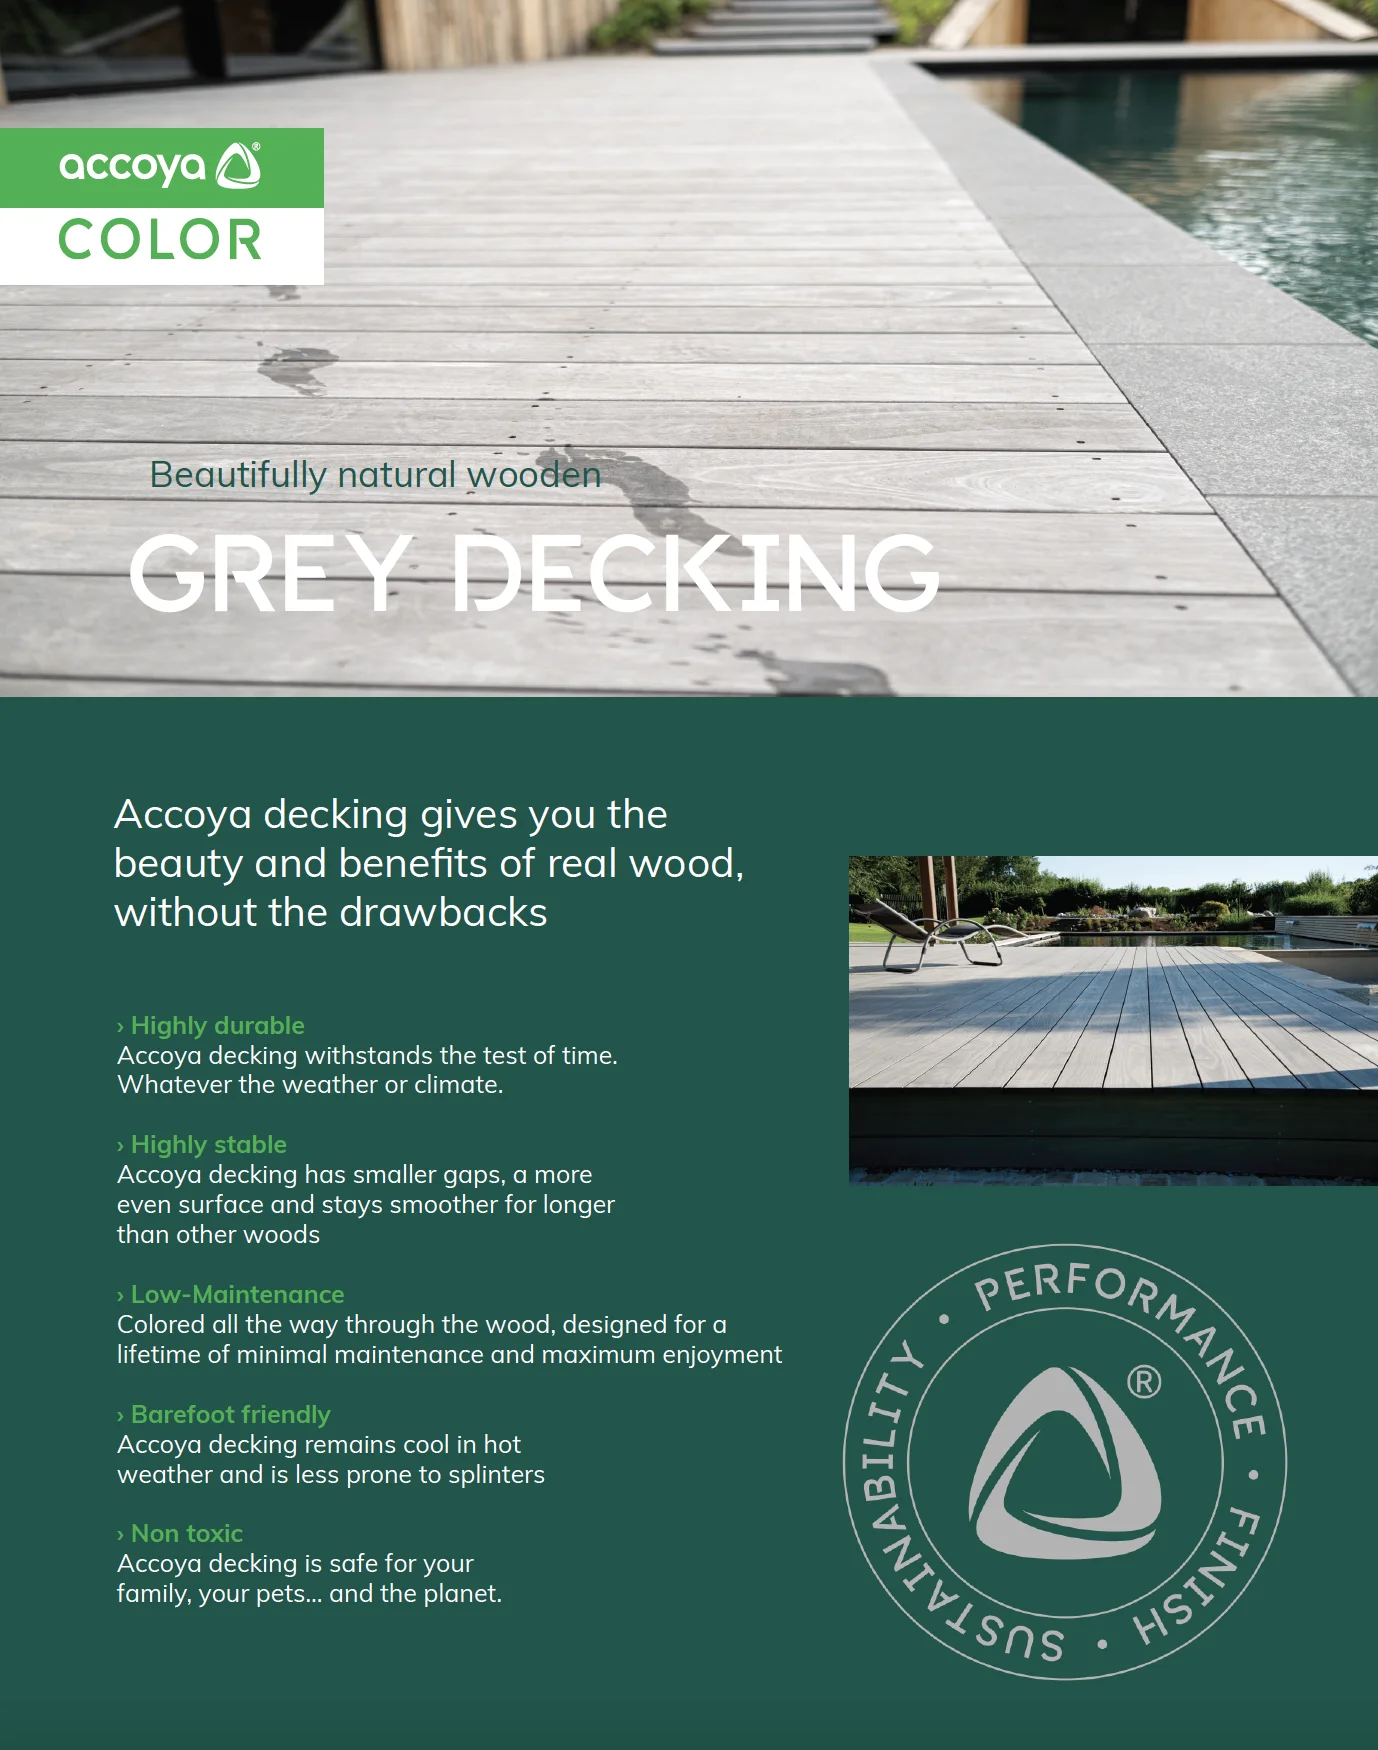 Accoya Color Grey Decking Benefits UK